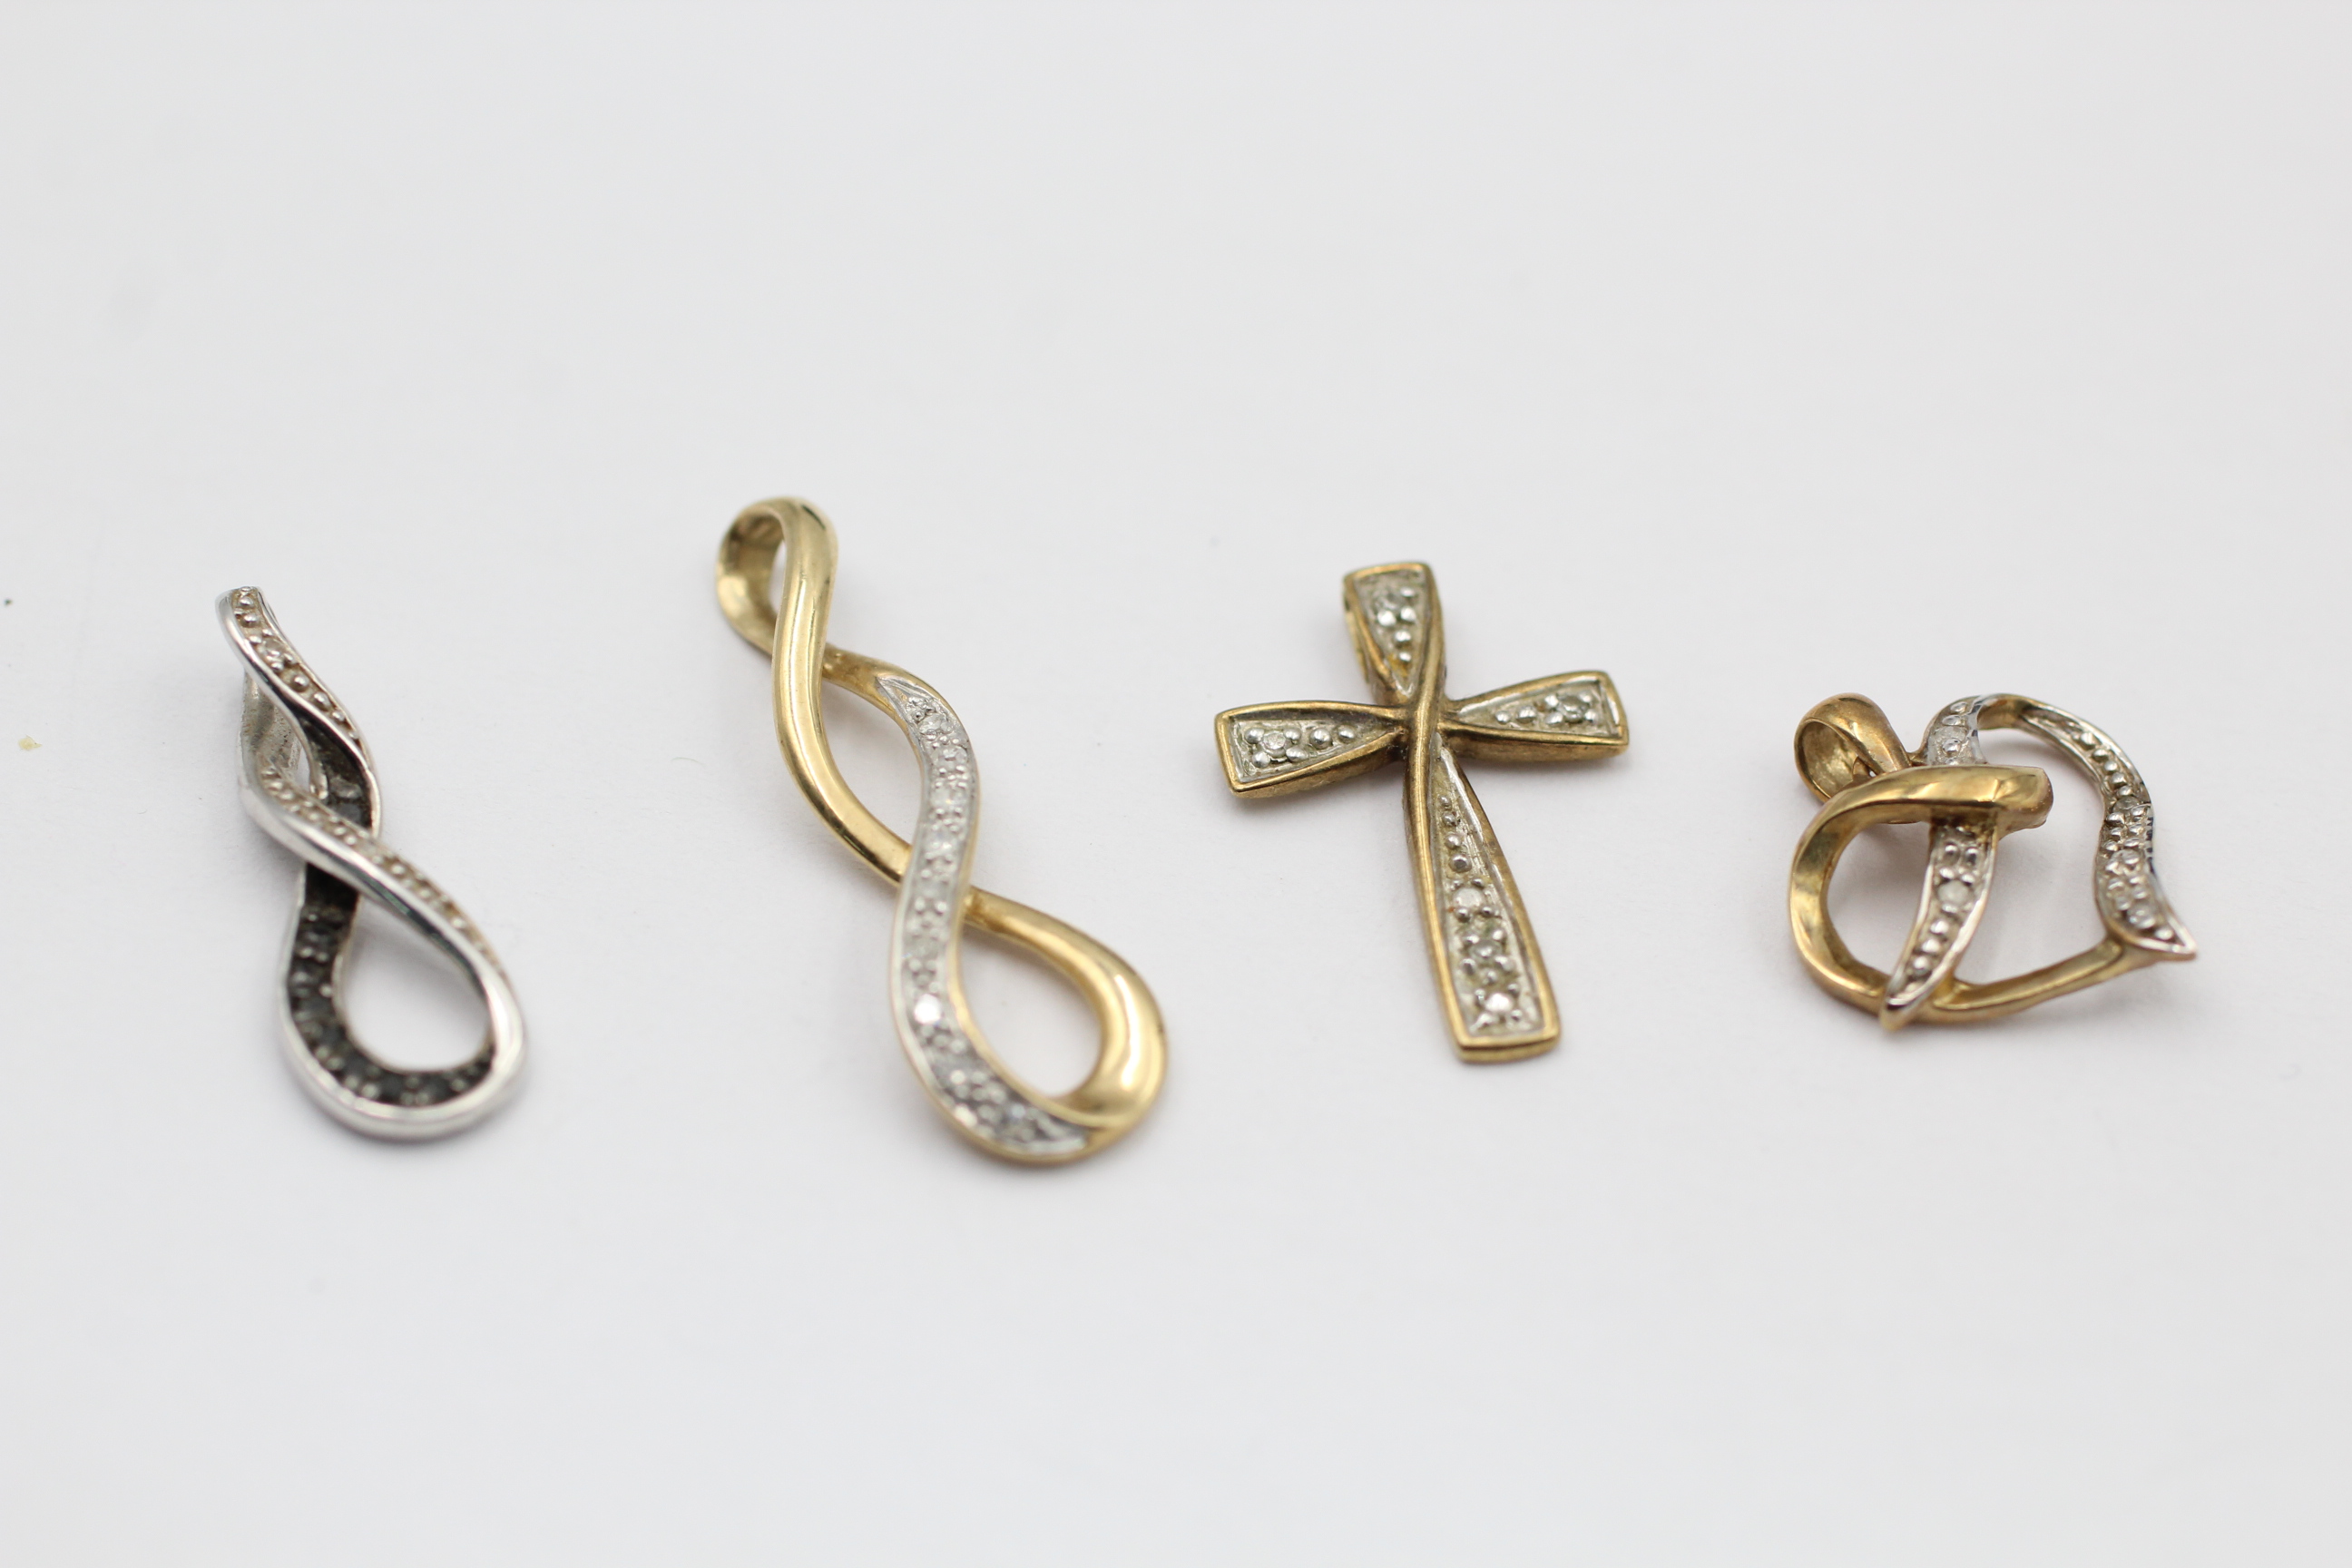 4 x 9ct gold diamond pendants inc. black diamond, religious cross, infinity (3.2g)